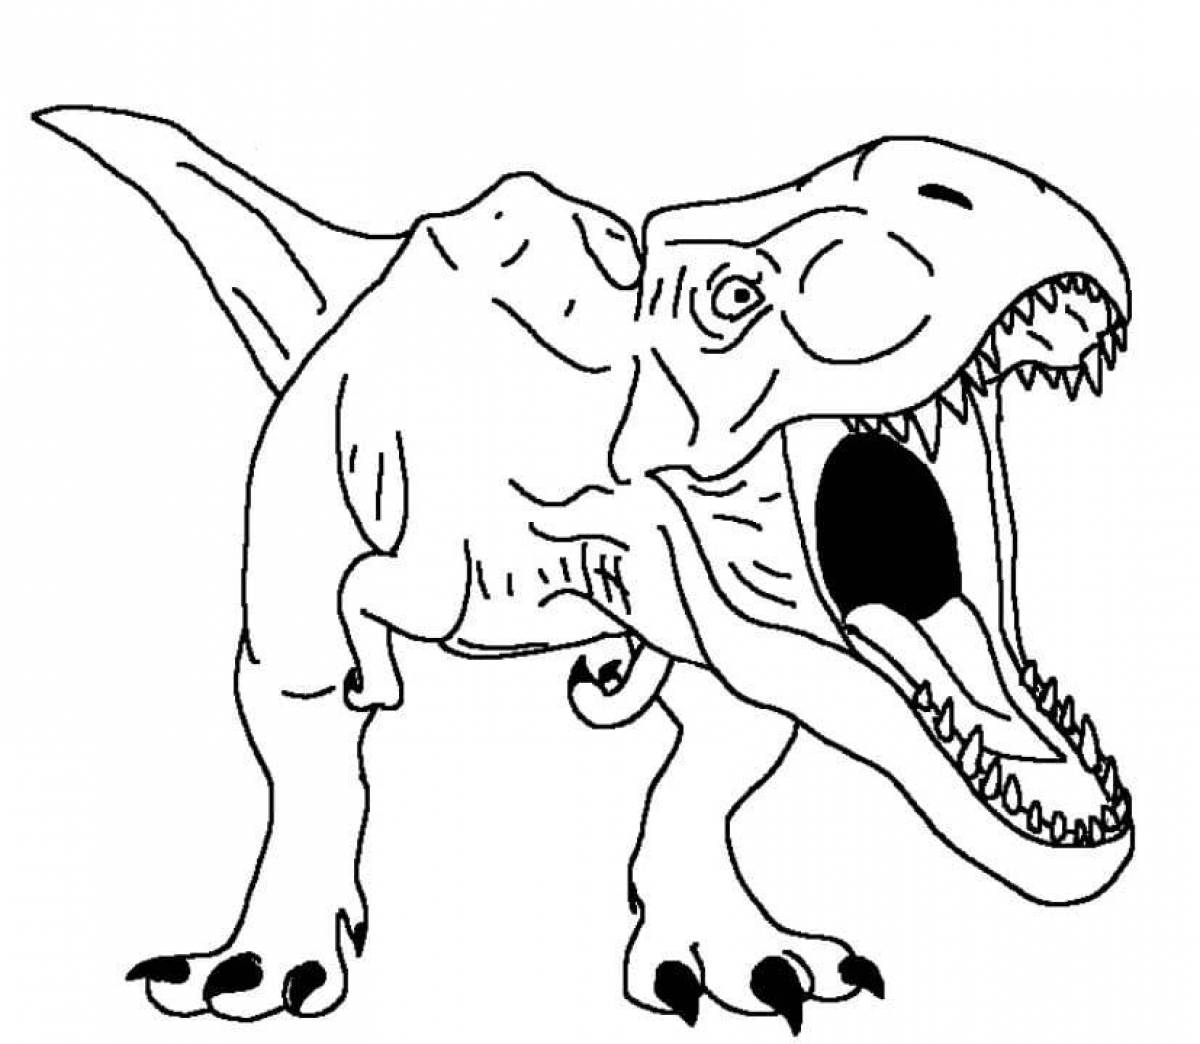 Dinosaur rex #10